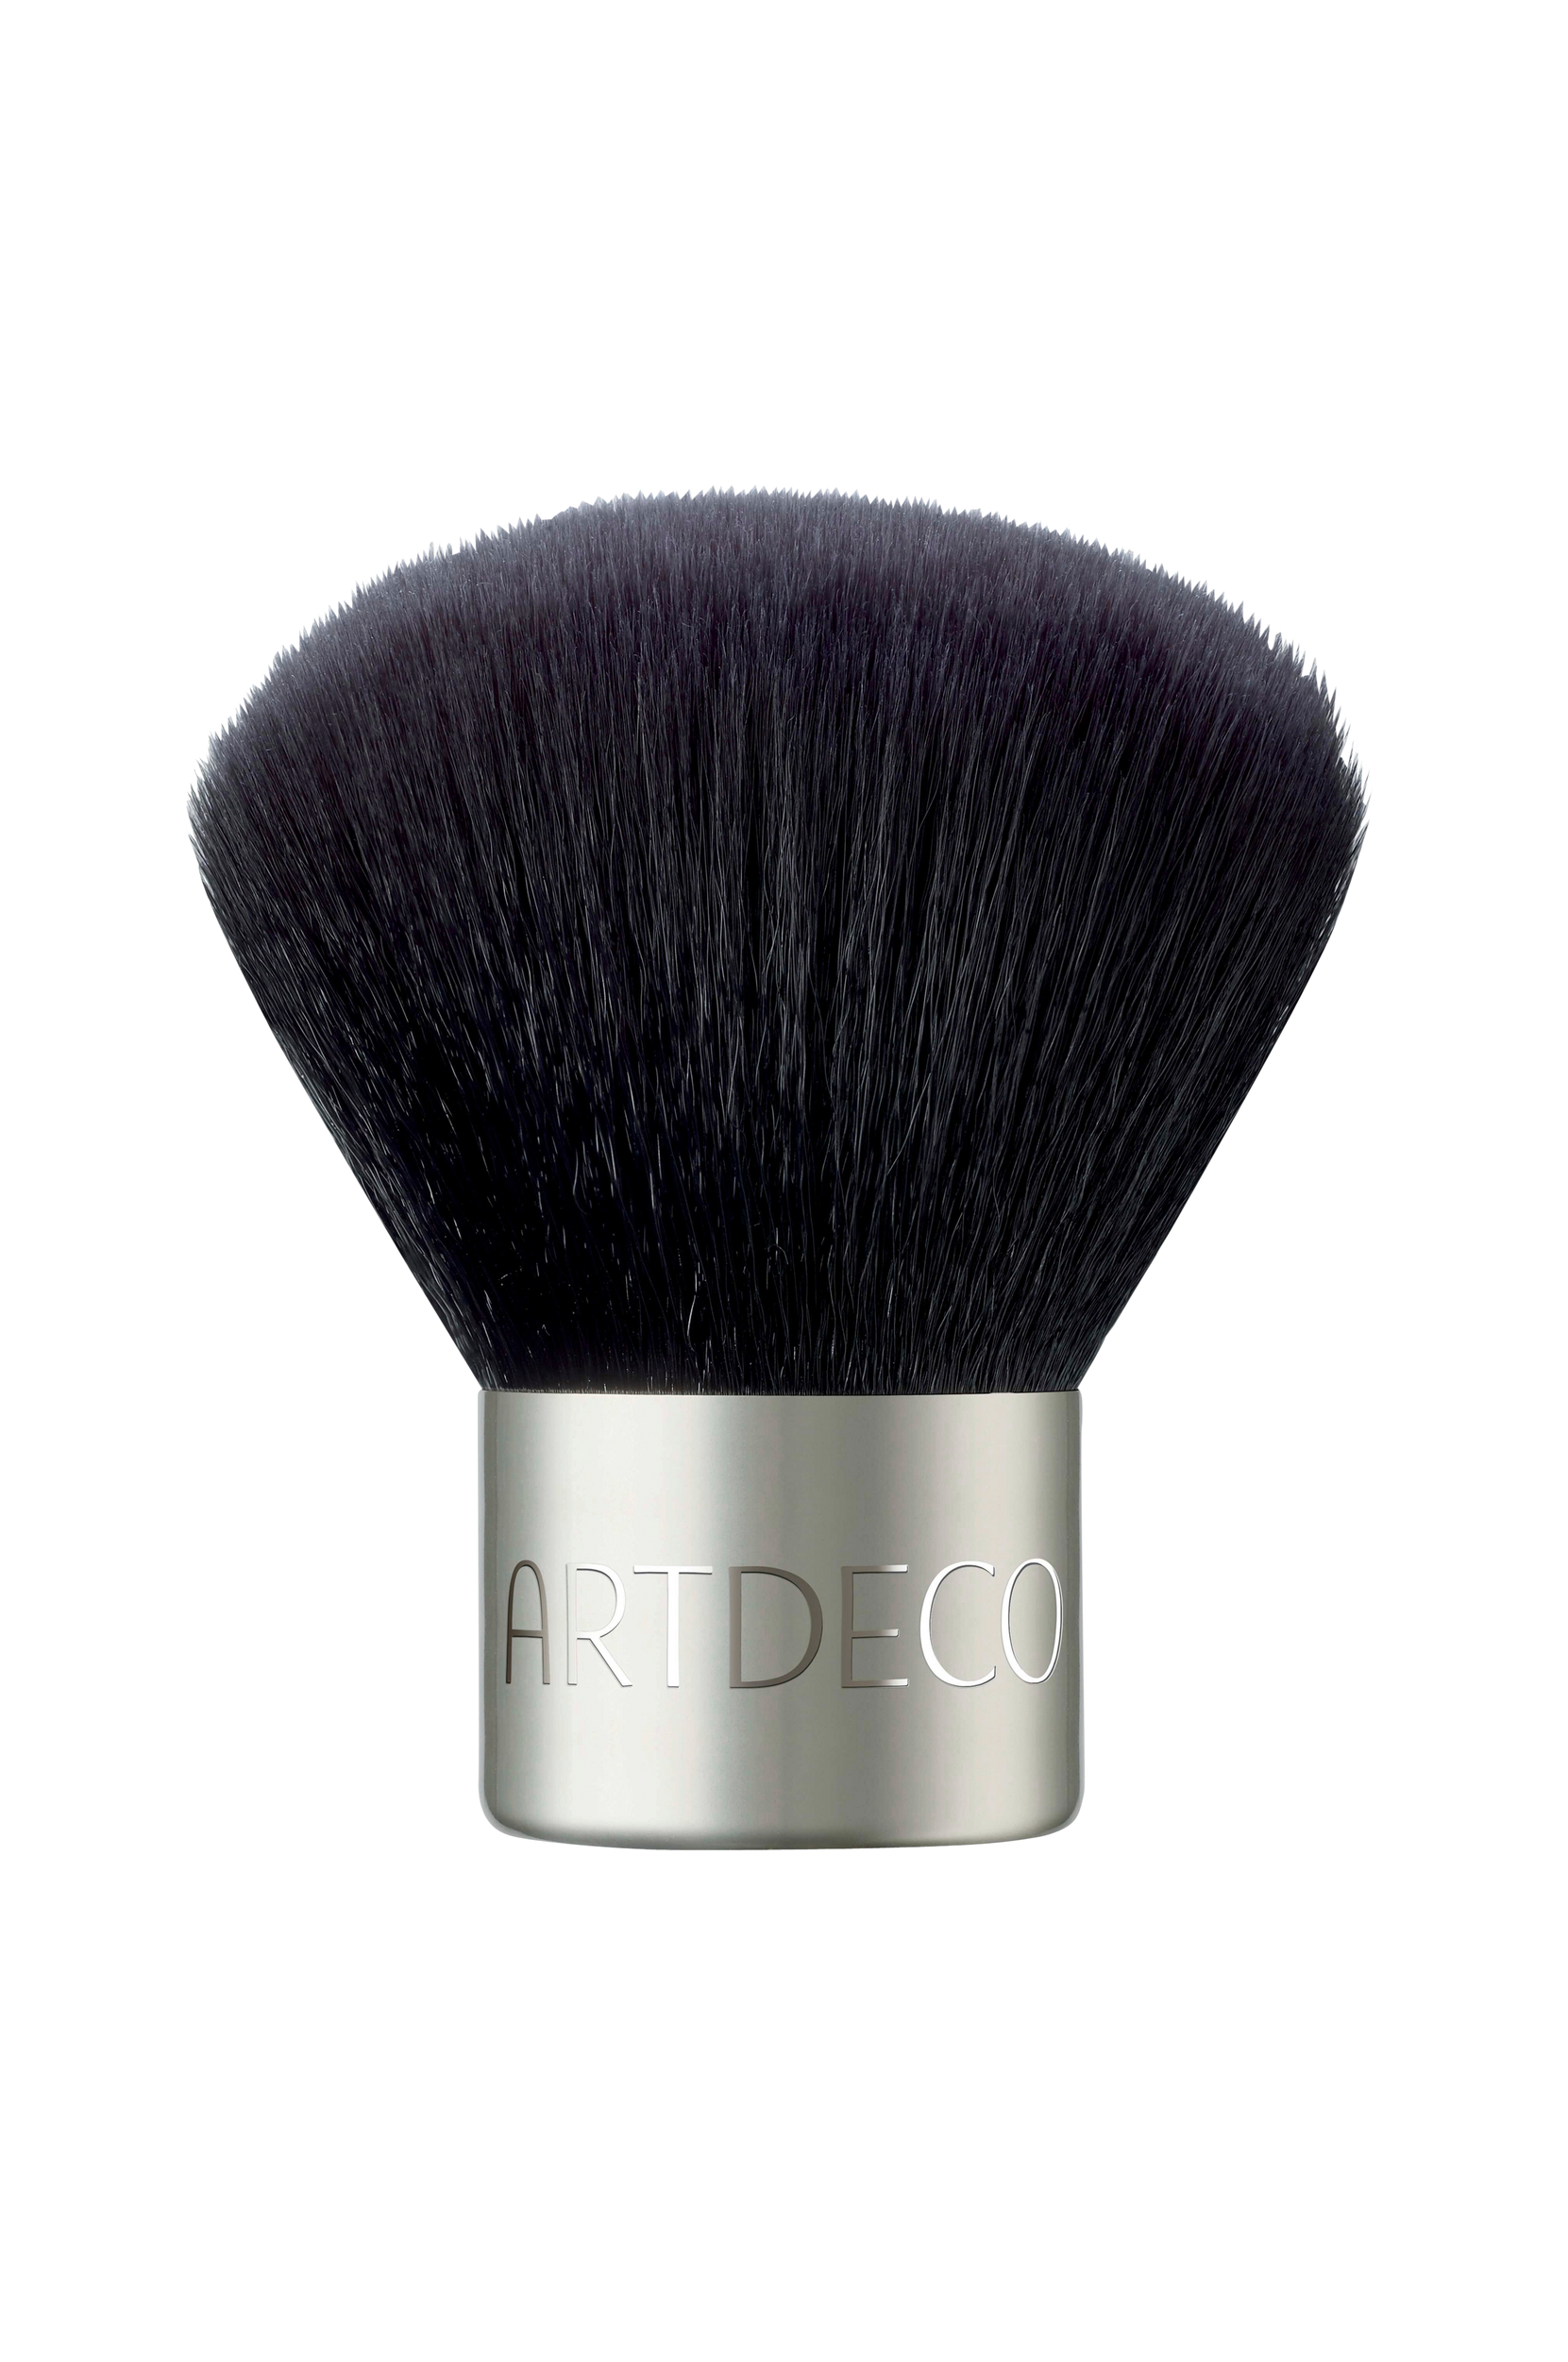 Artdeco - Mineral Powder Foundation Brush - Svart